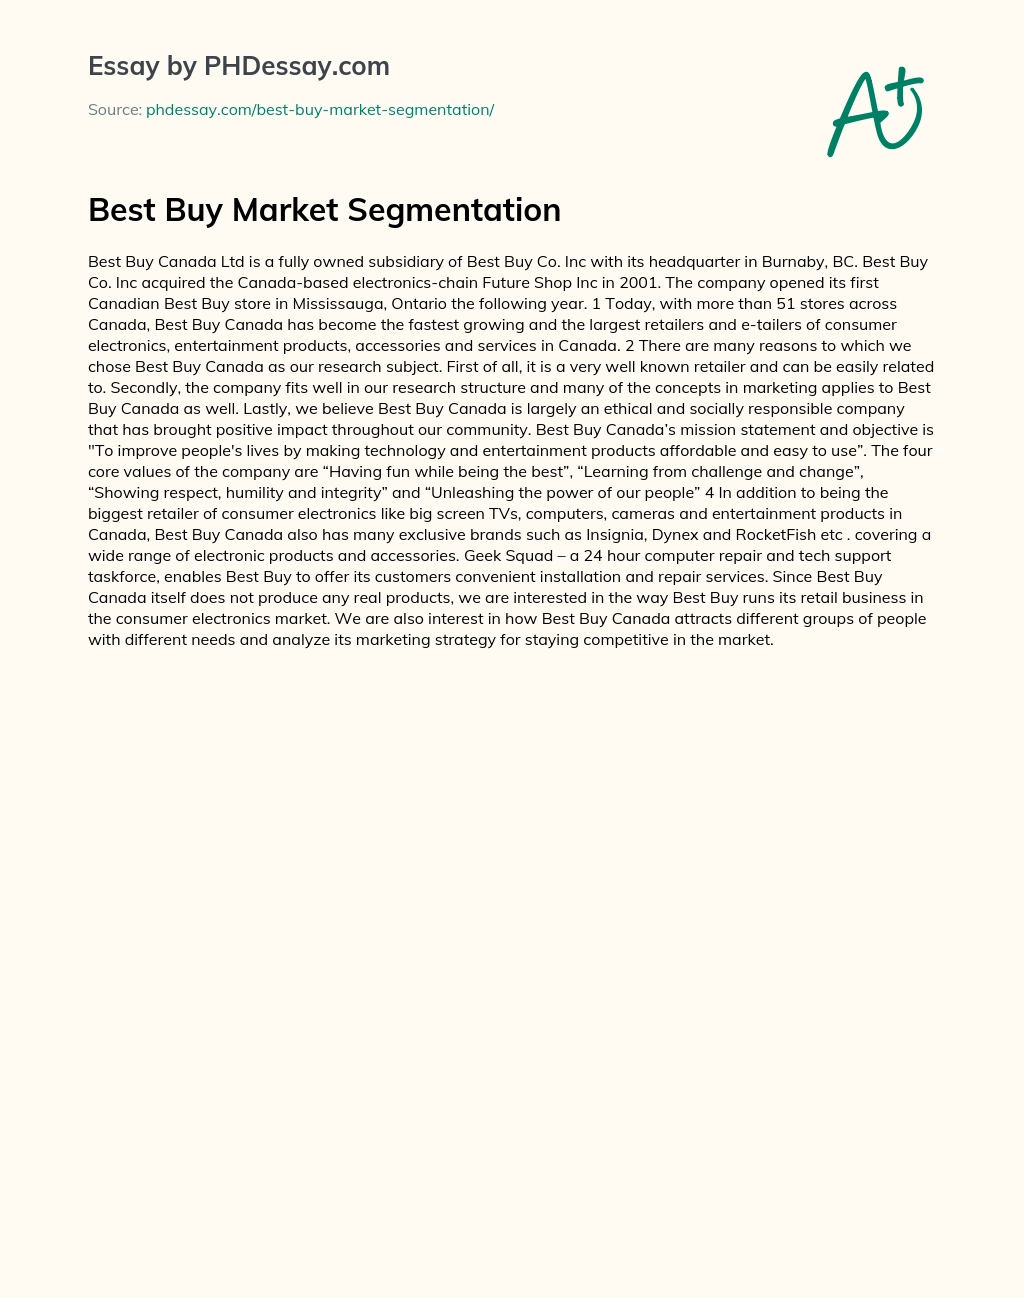 Best Buy Market Segmentation essay